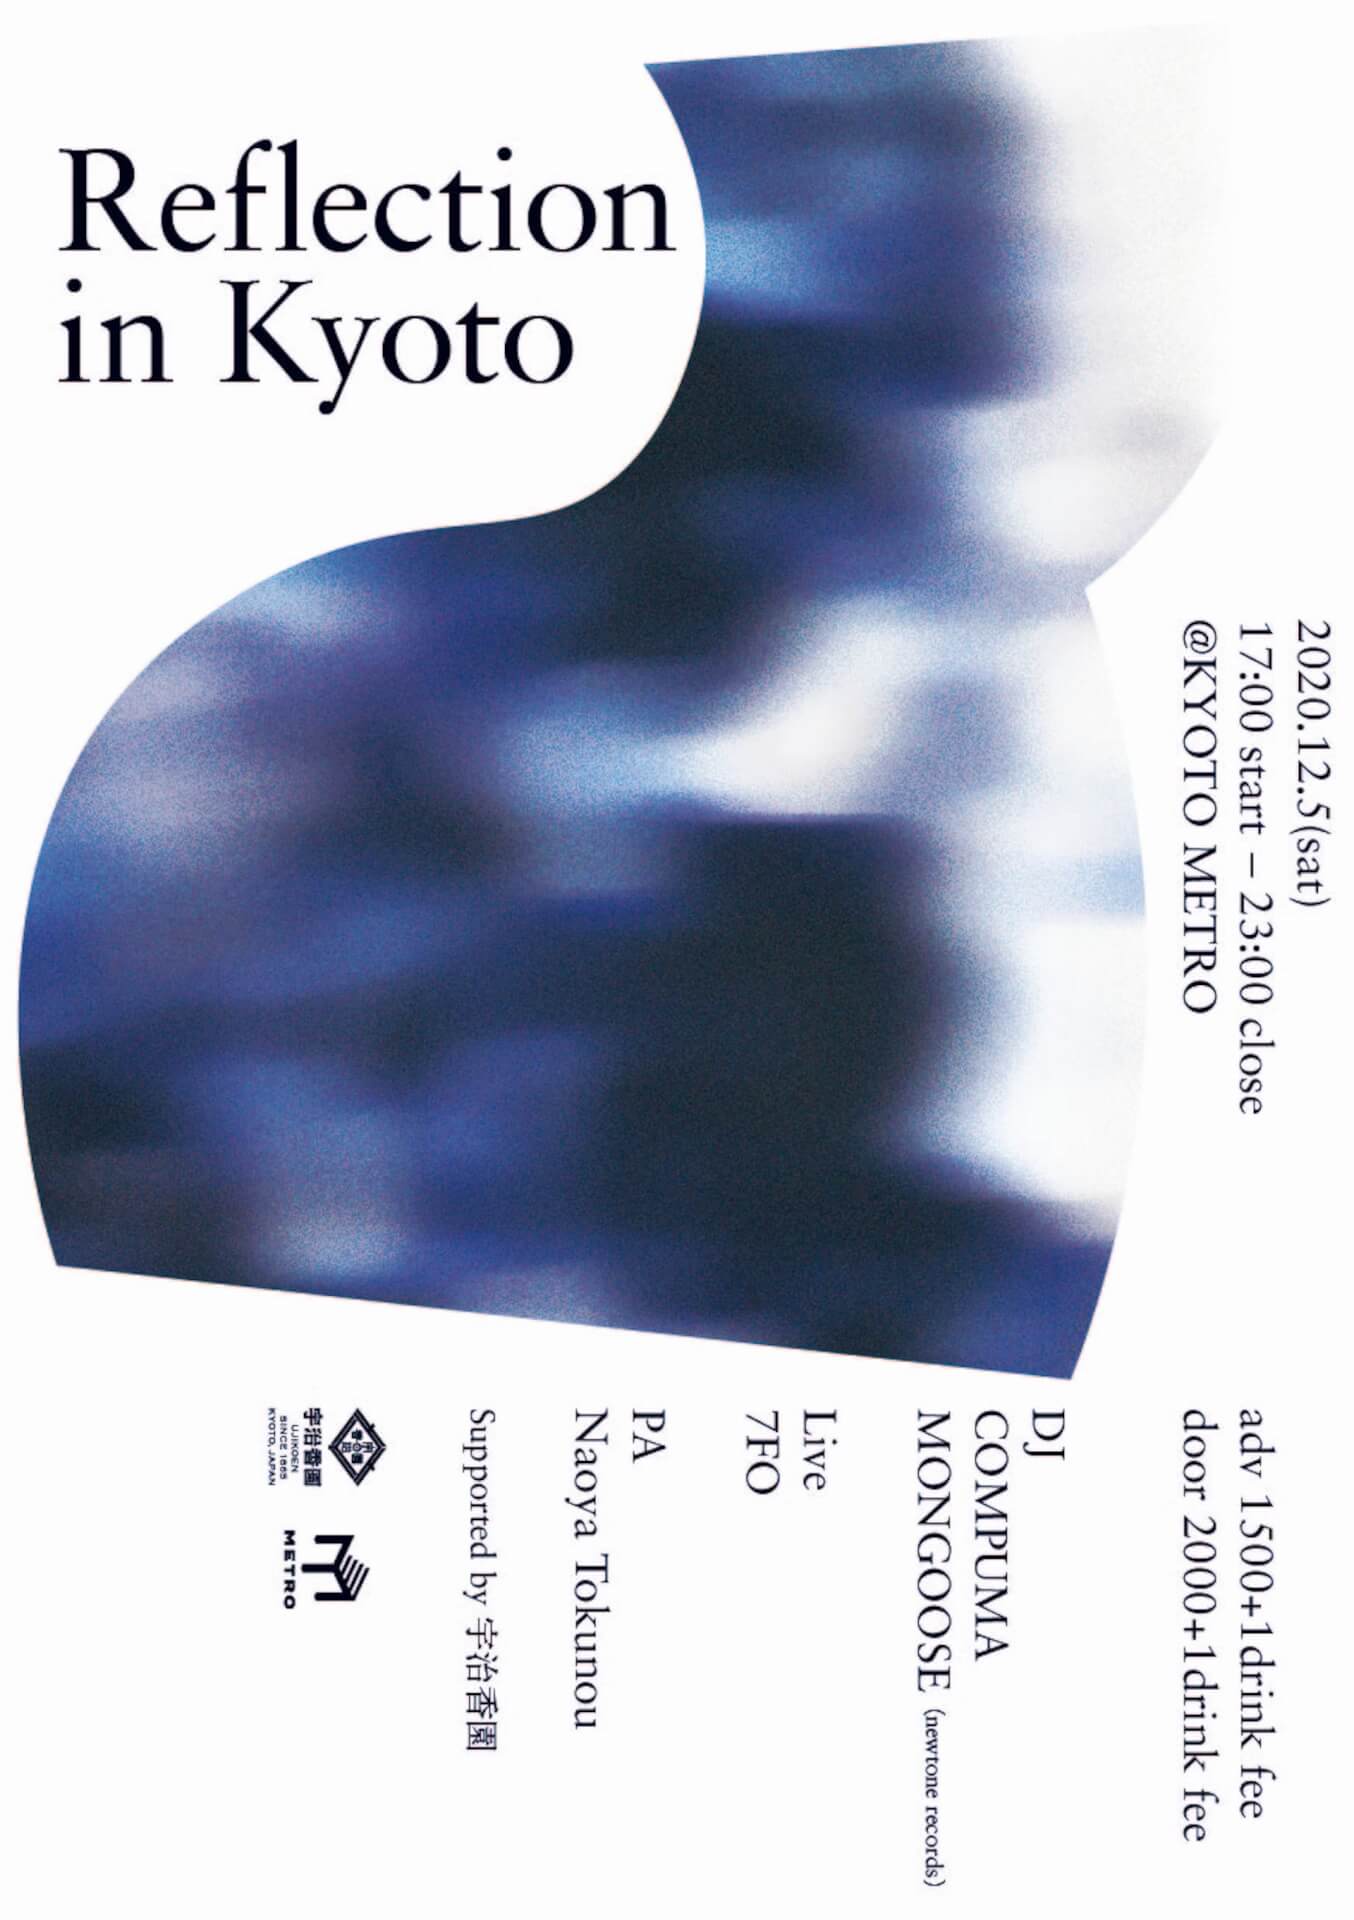 COMPUMA＆竹久圏の新作『Reflection』発売記念イベント＜Reflection in Kyoto＞が開催決定！COMPUMAや7FOも出演 music201112_reflection_event_8